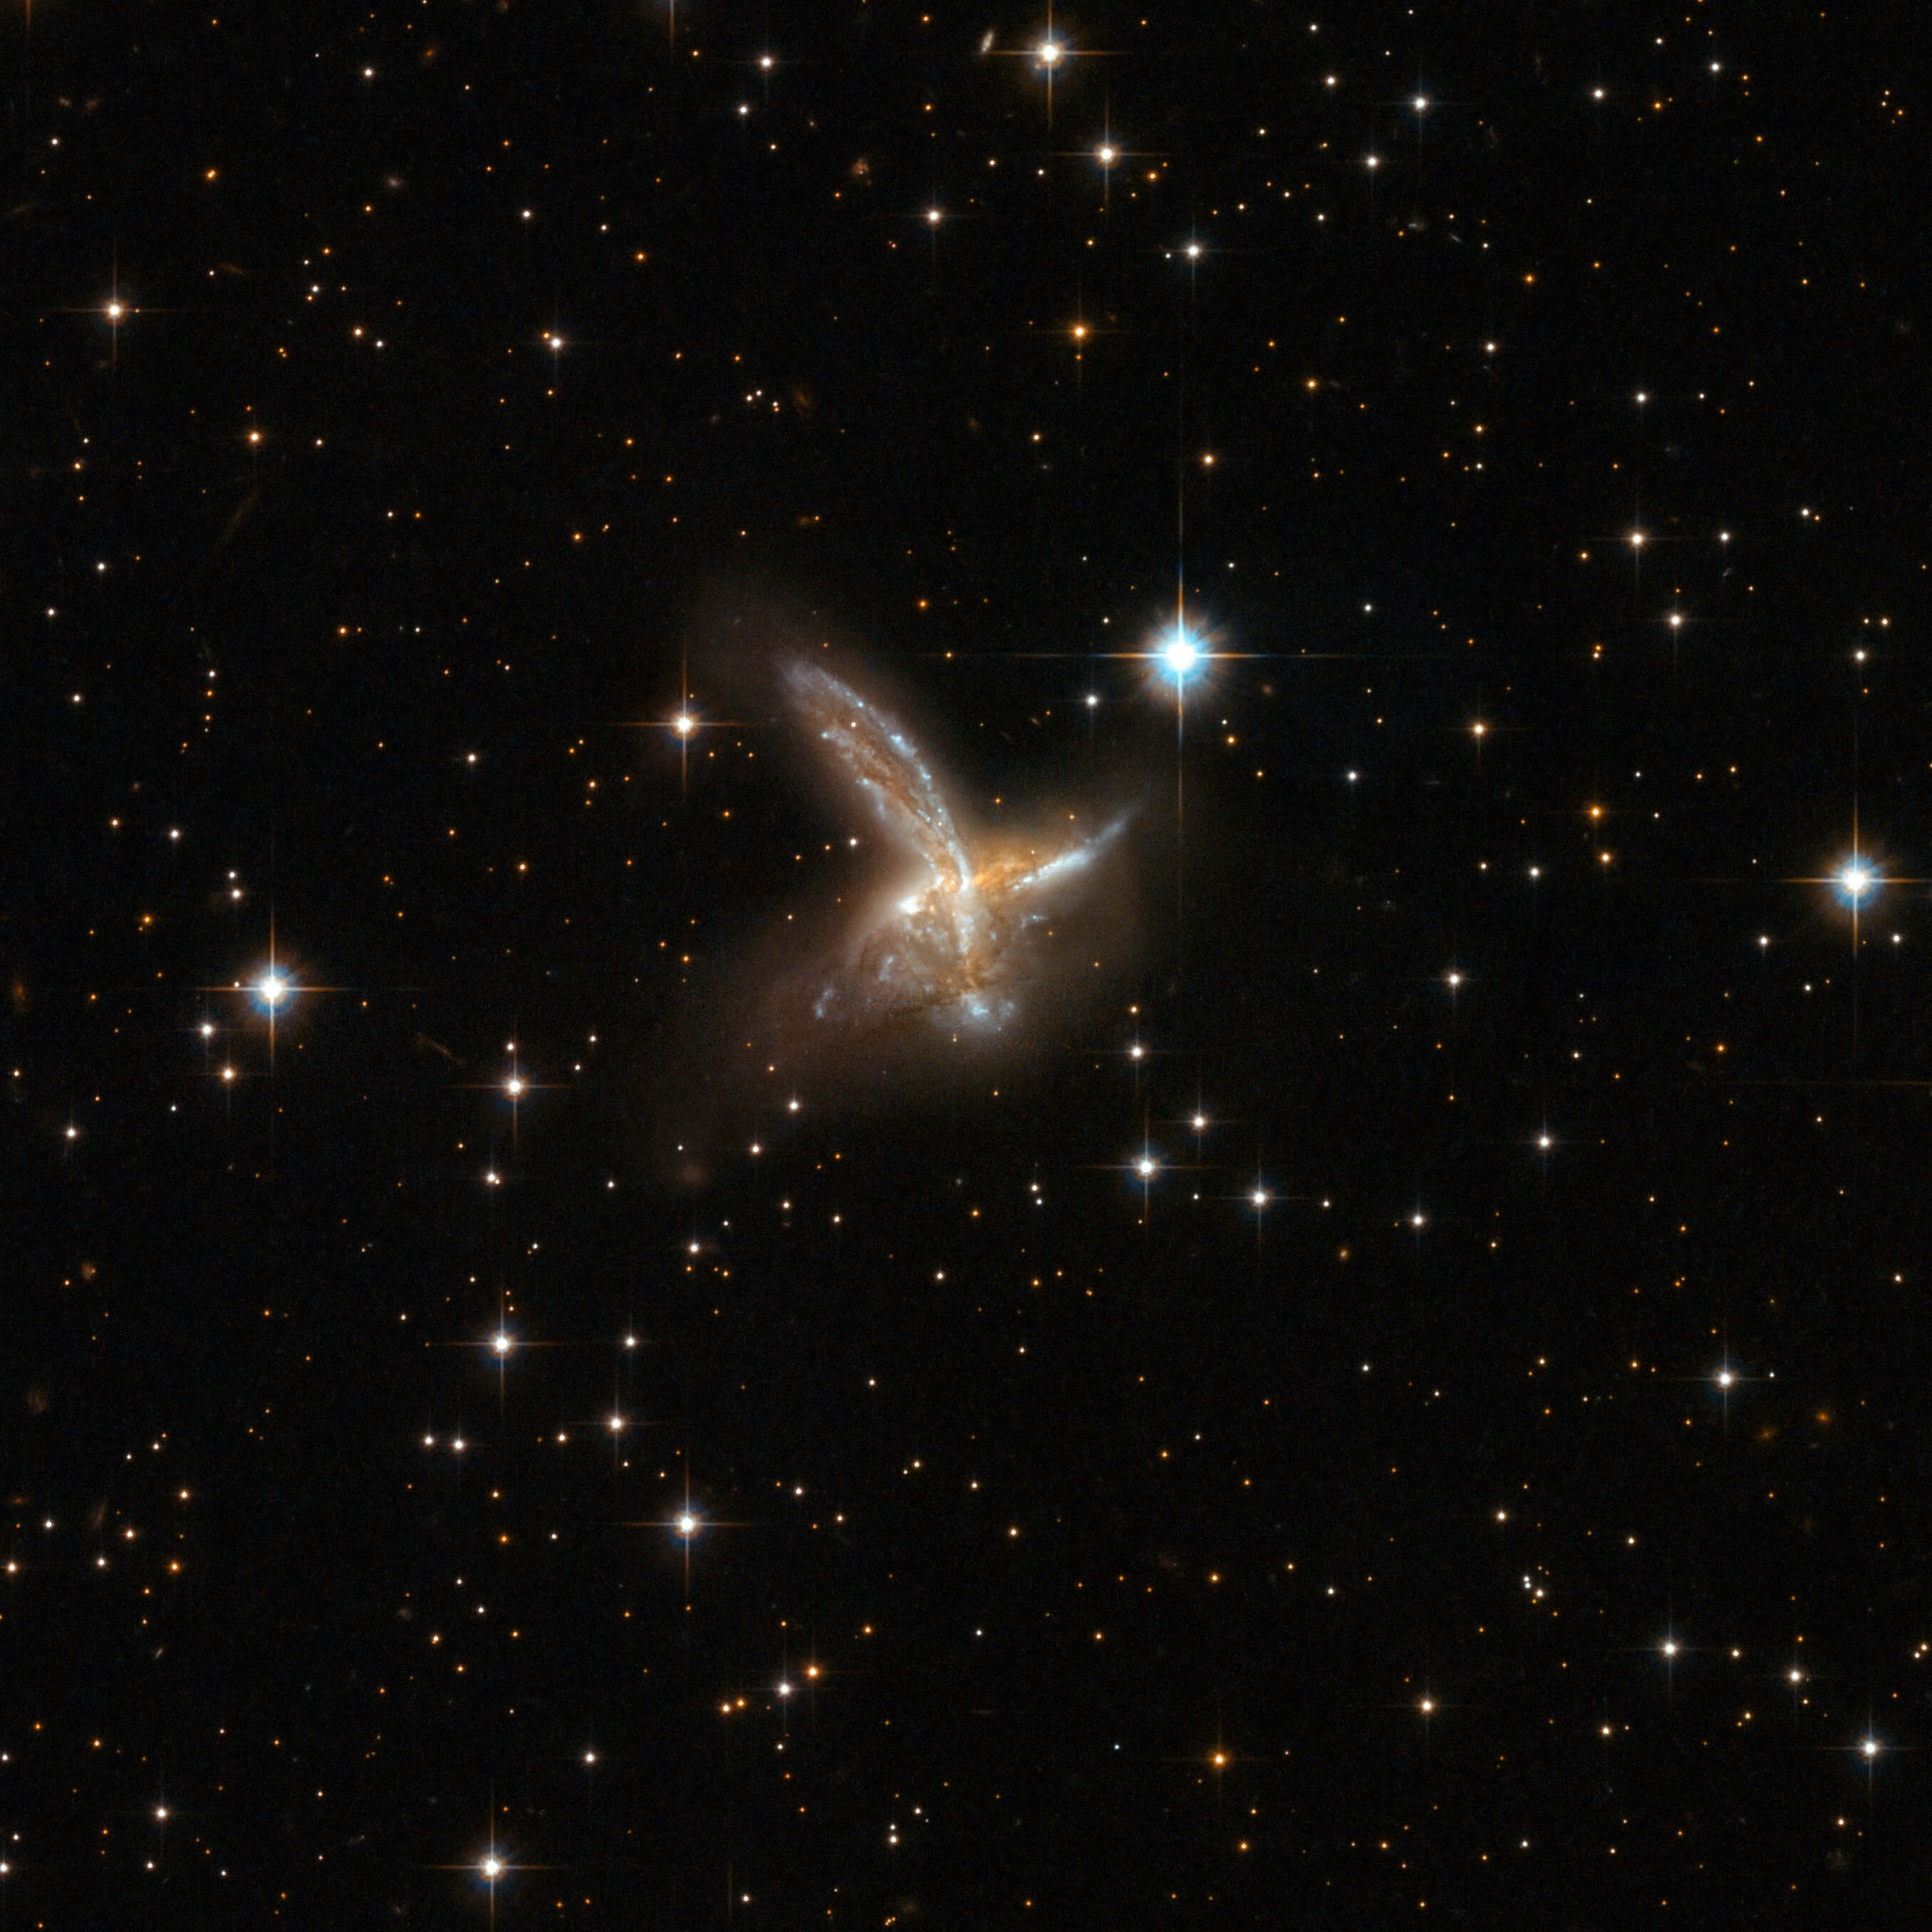 Hubble’s Amazing Universe